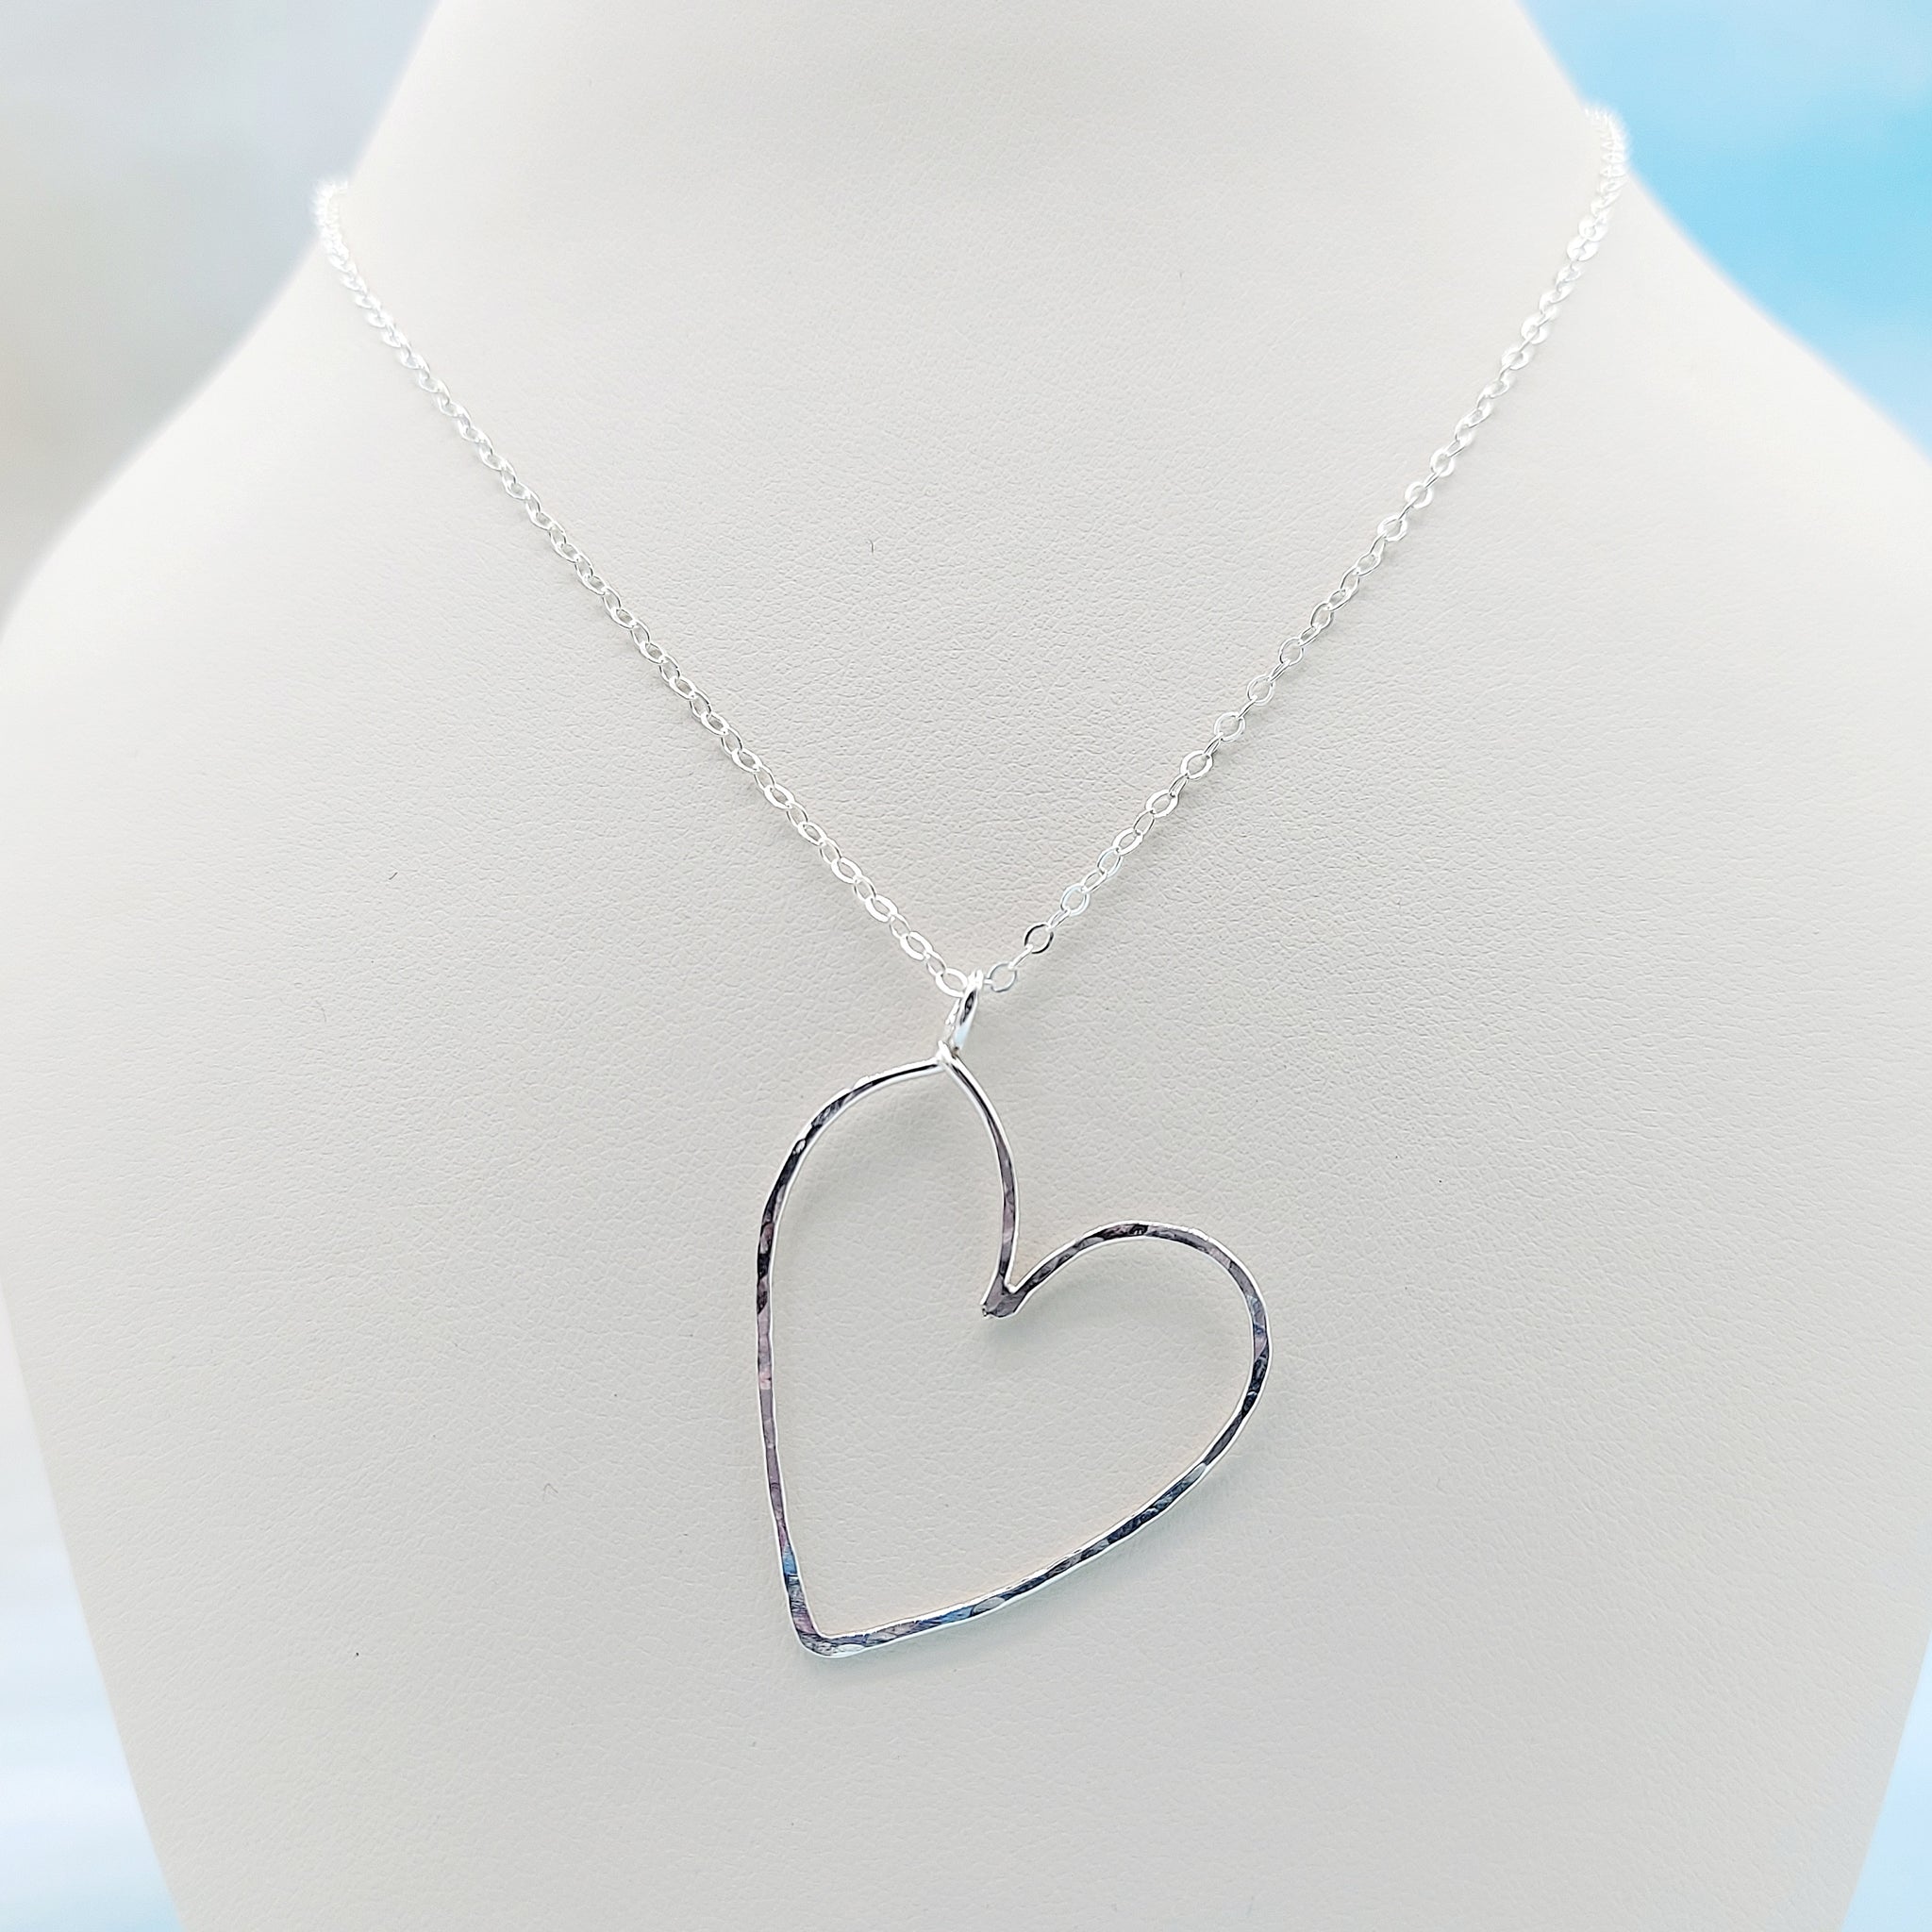 Gold Sideways Heart Necklace, Sterling Sideways Heart Necklace With CZ  Stone, Small Gold Heart Necklace, Petite Heart Charm Necklace - Etsy